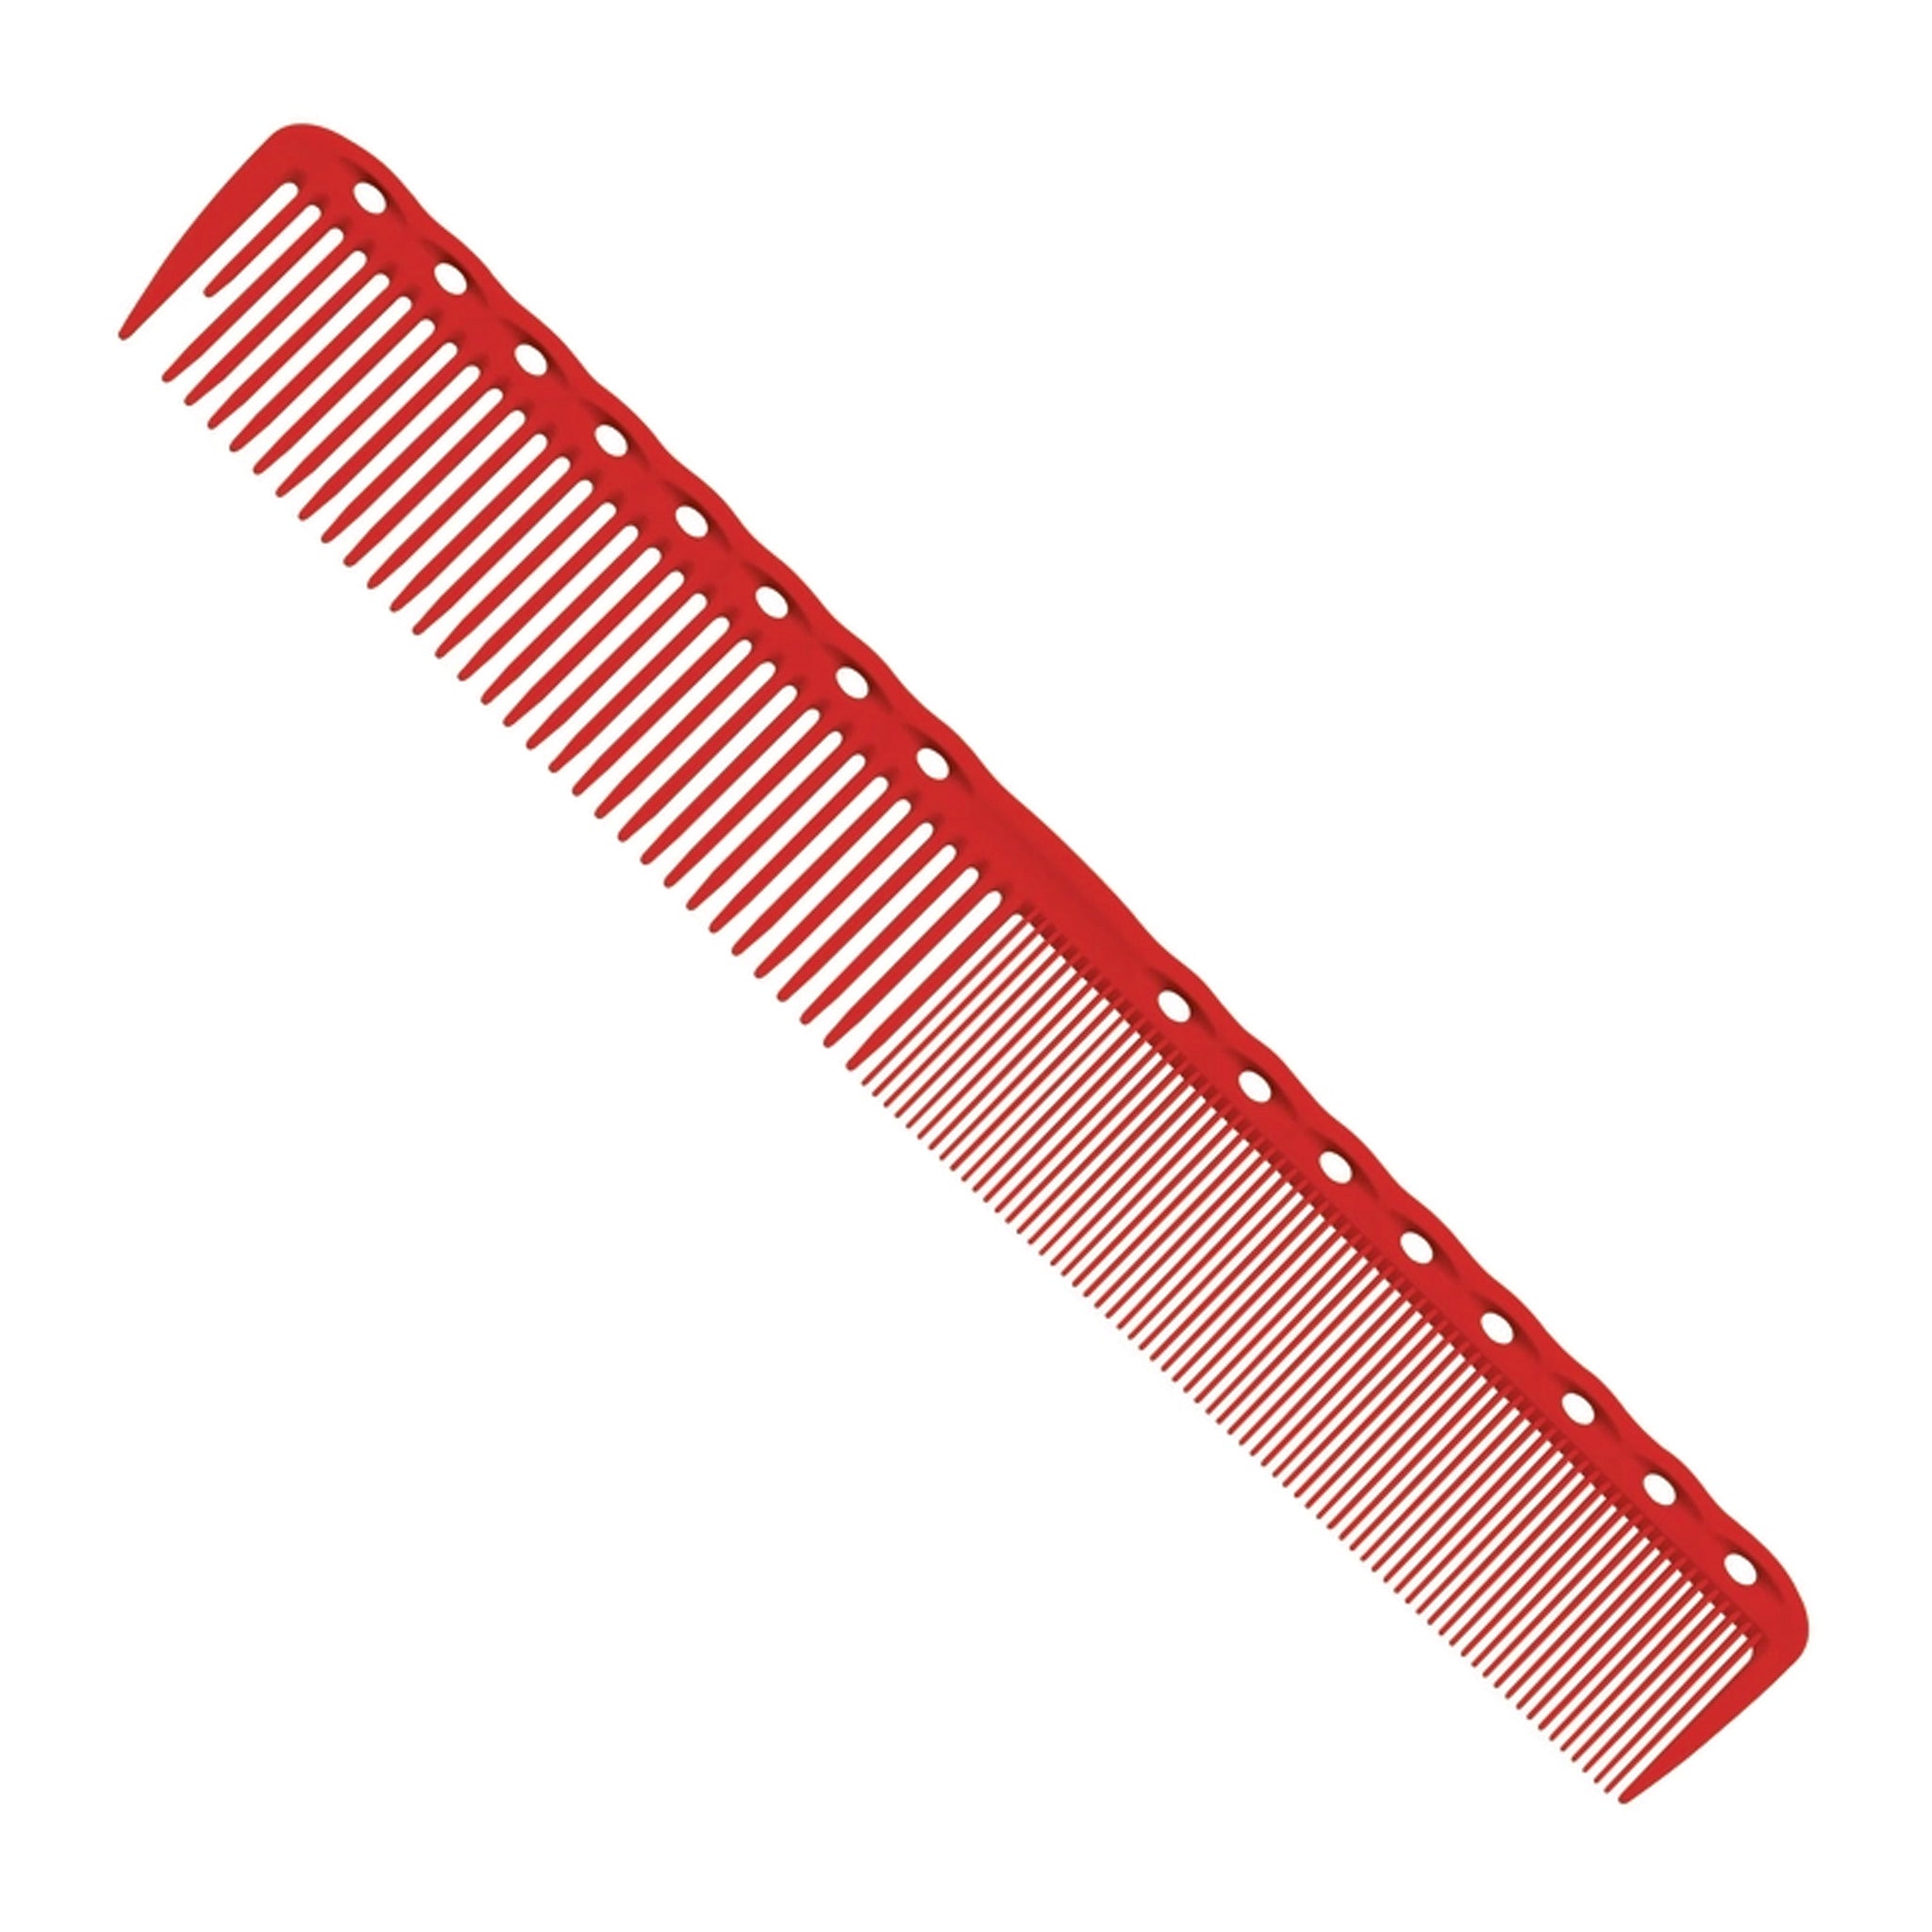 YS Park 336 Basic Cutting Comb